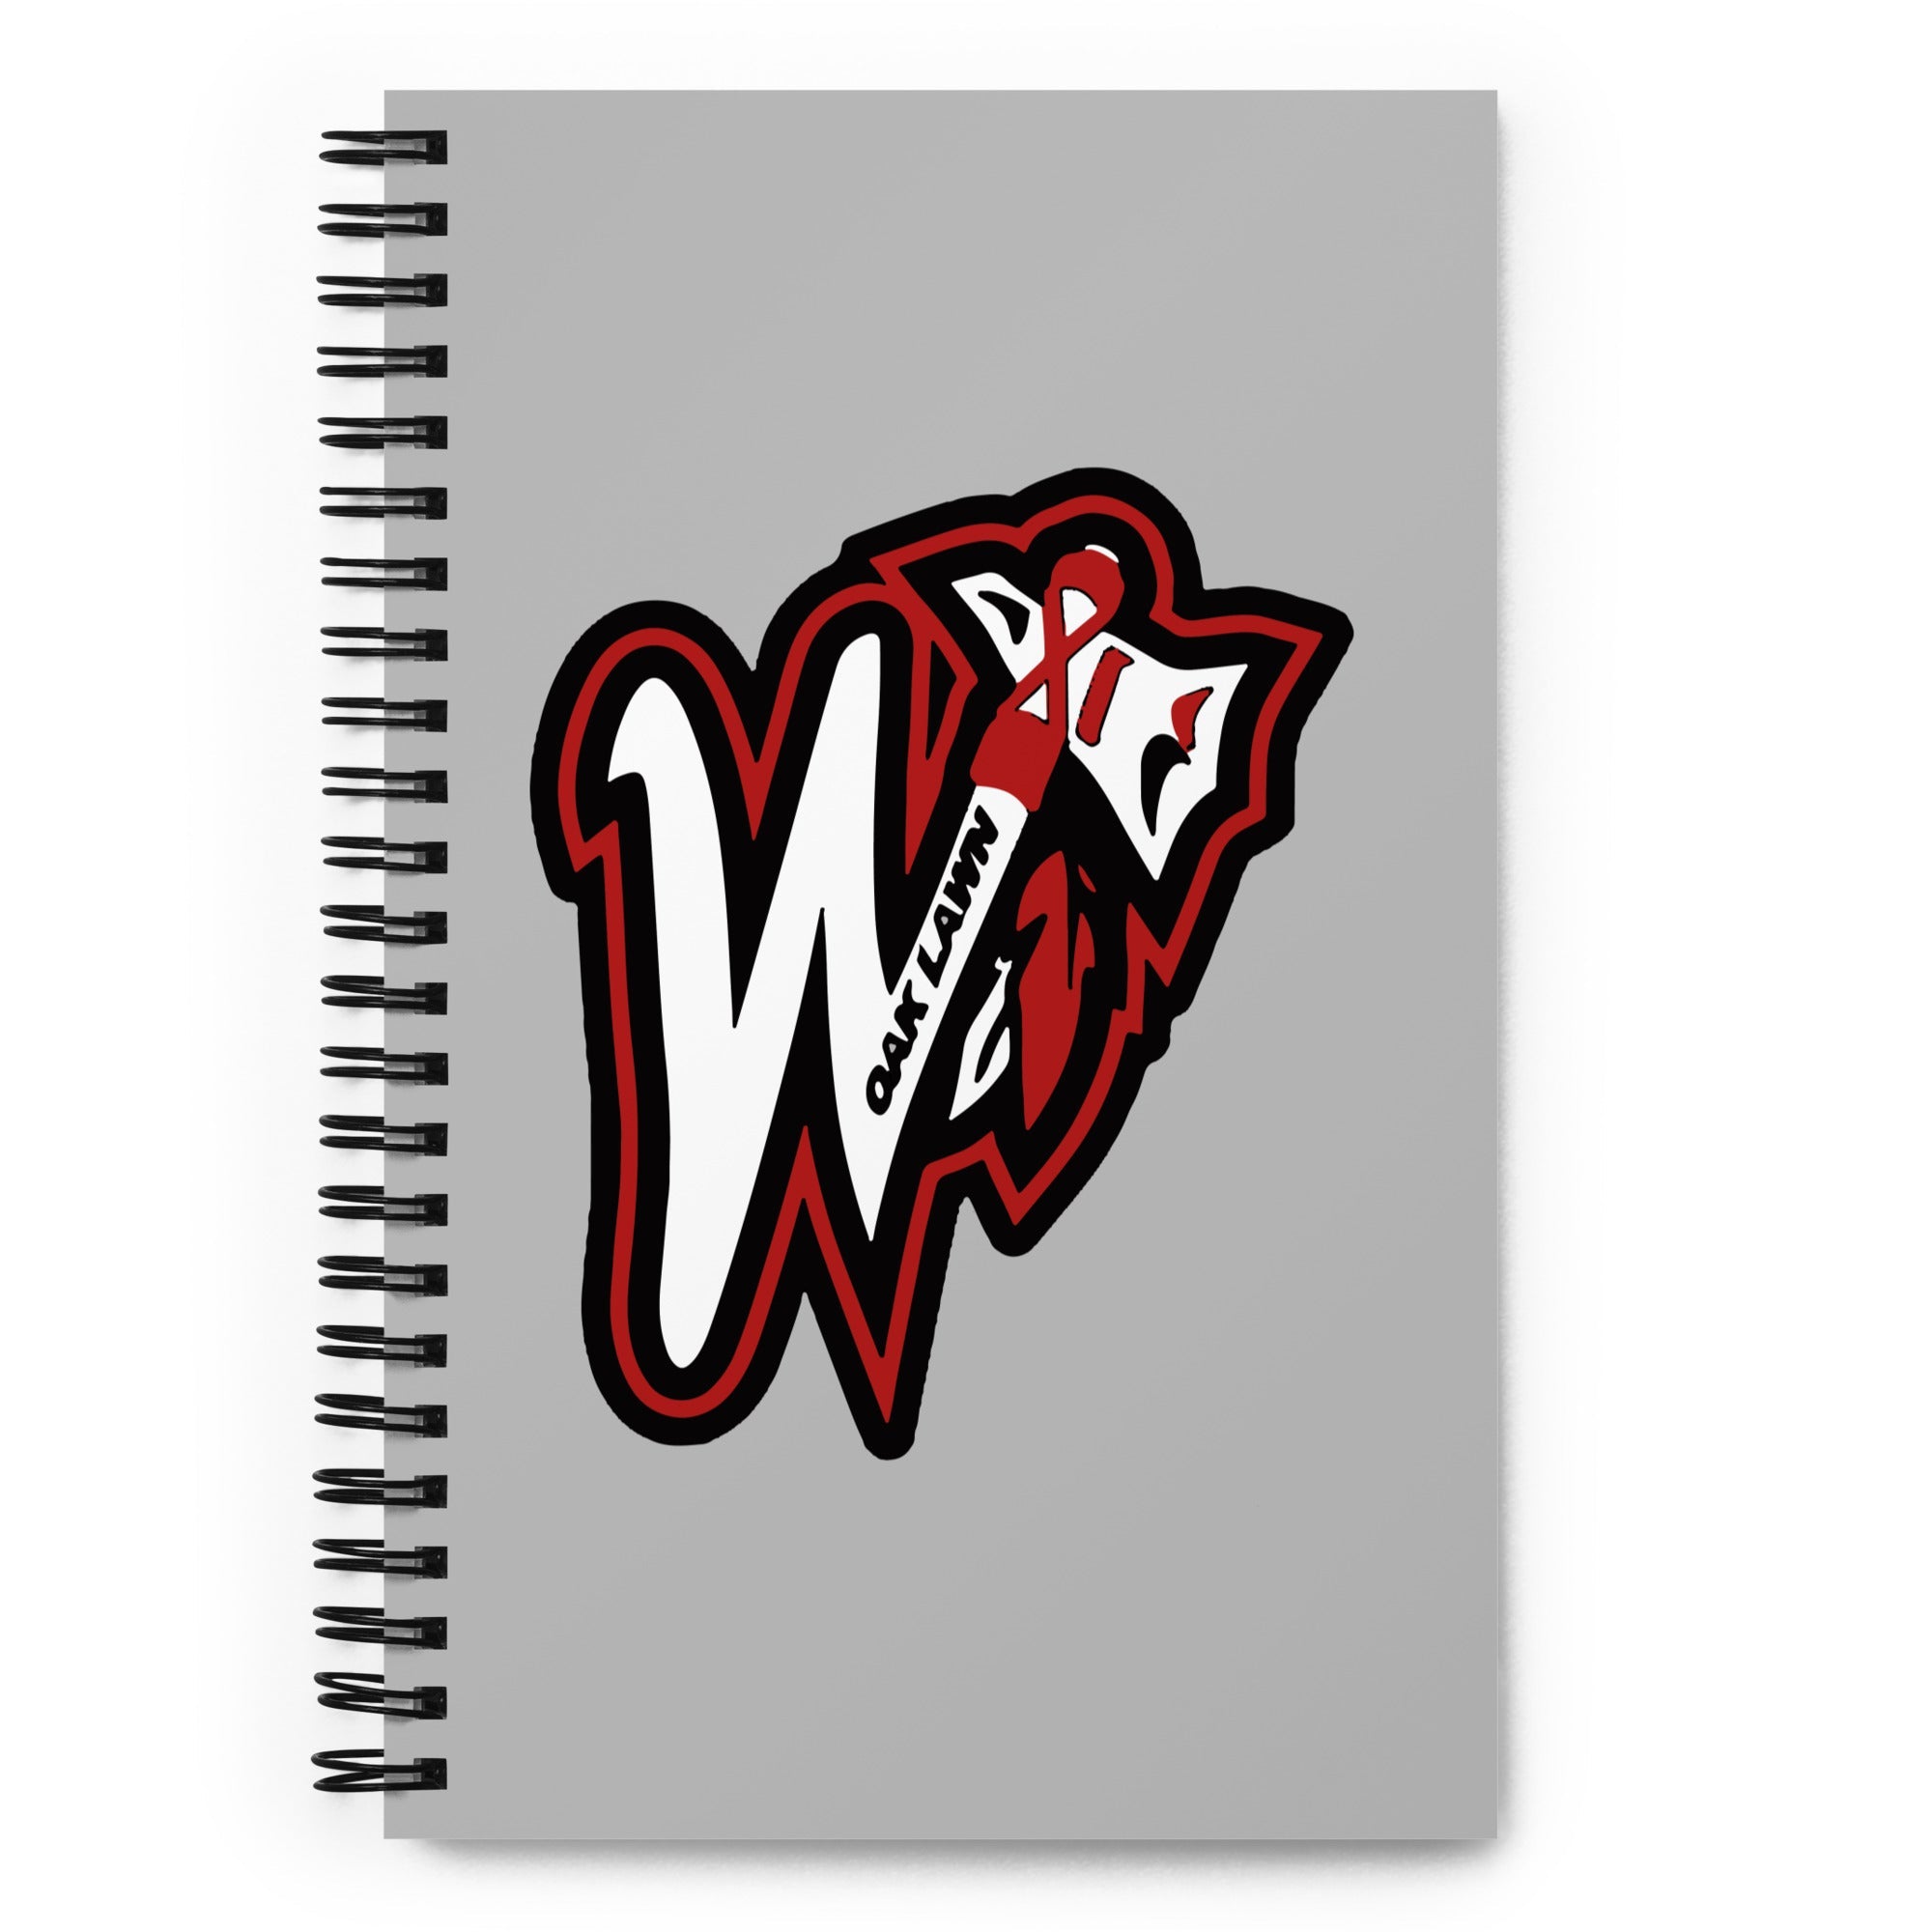 WBOL Spiral notebook